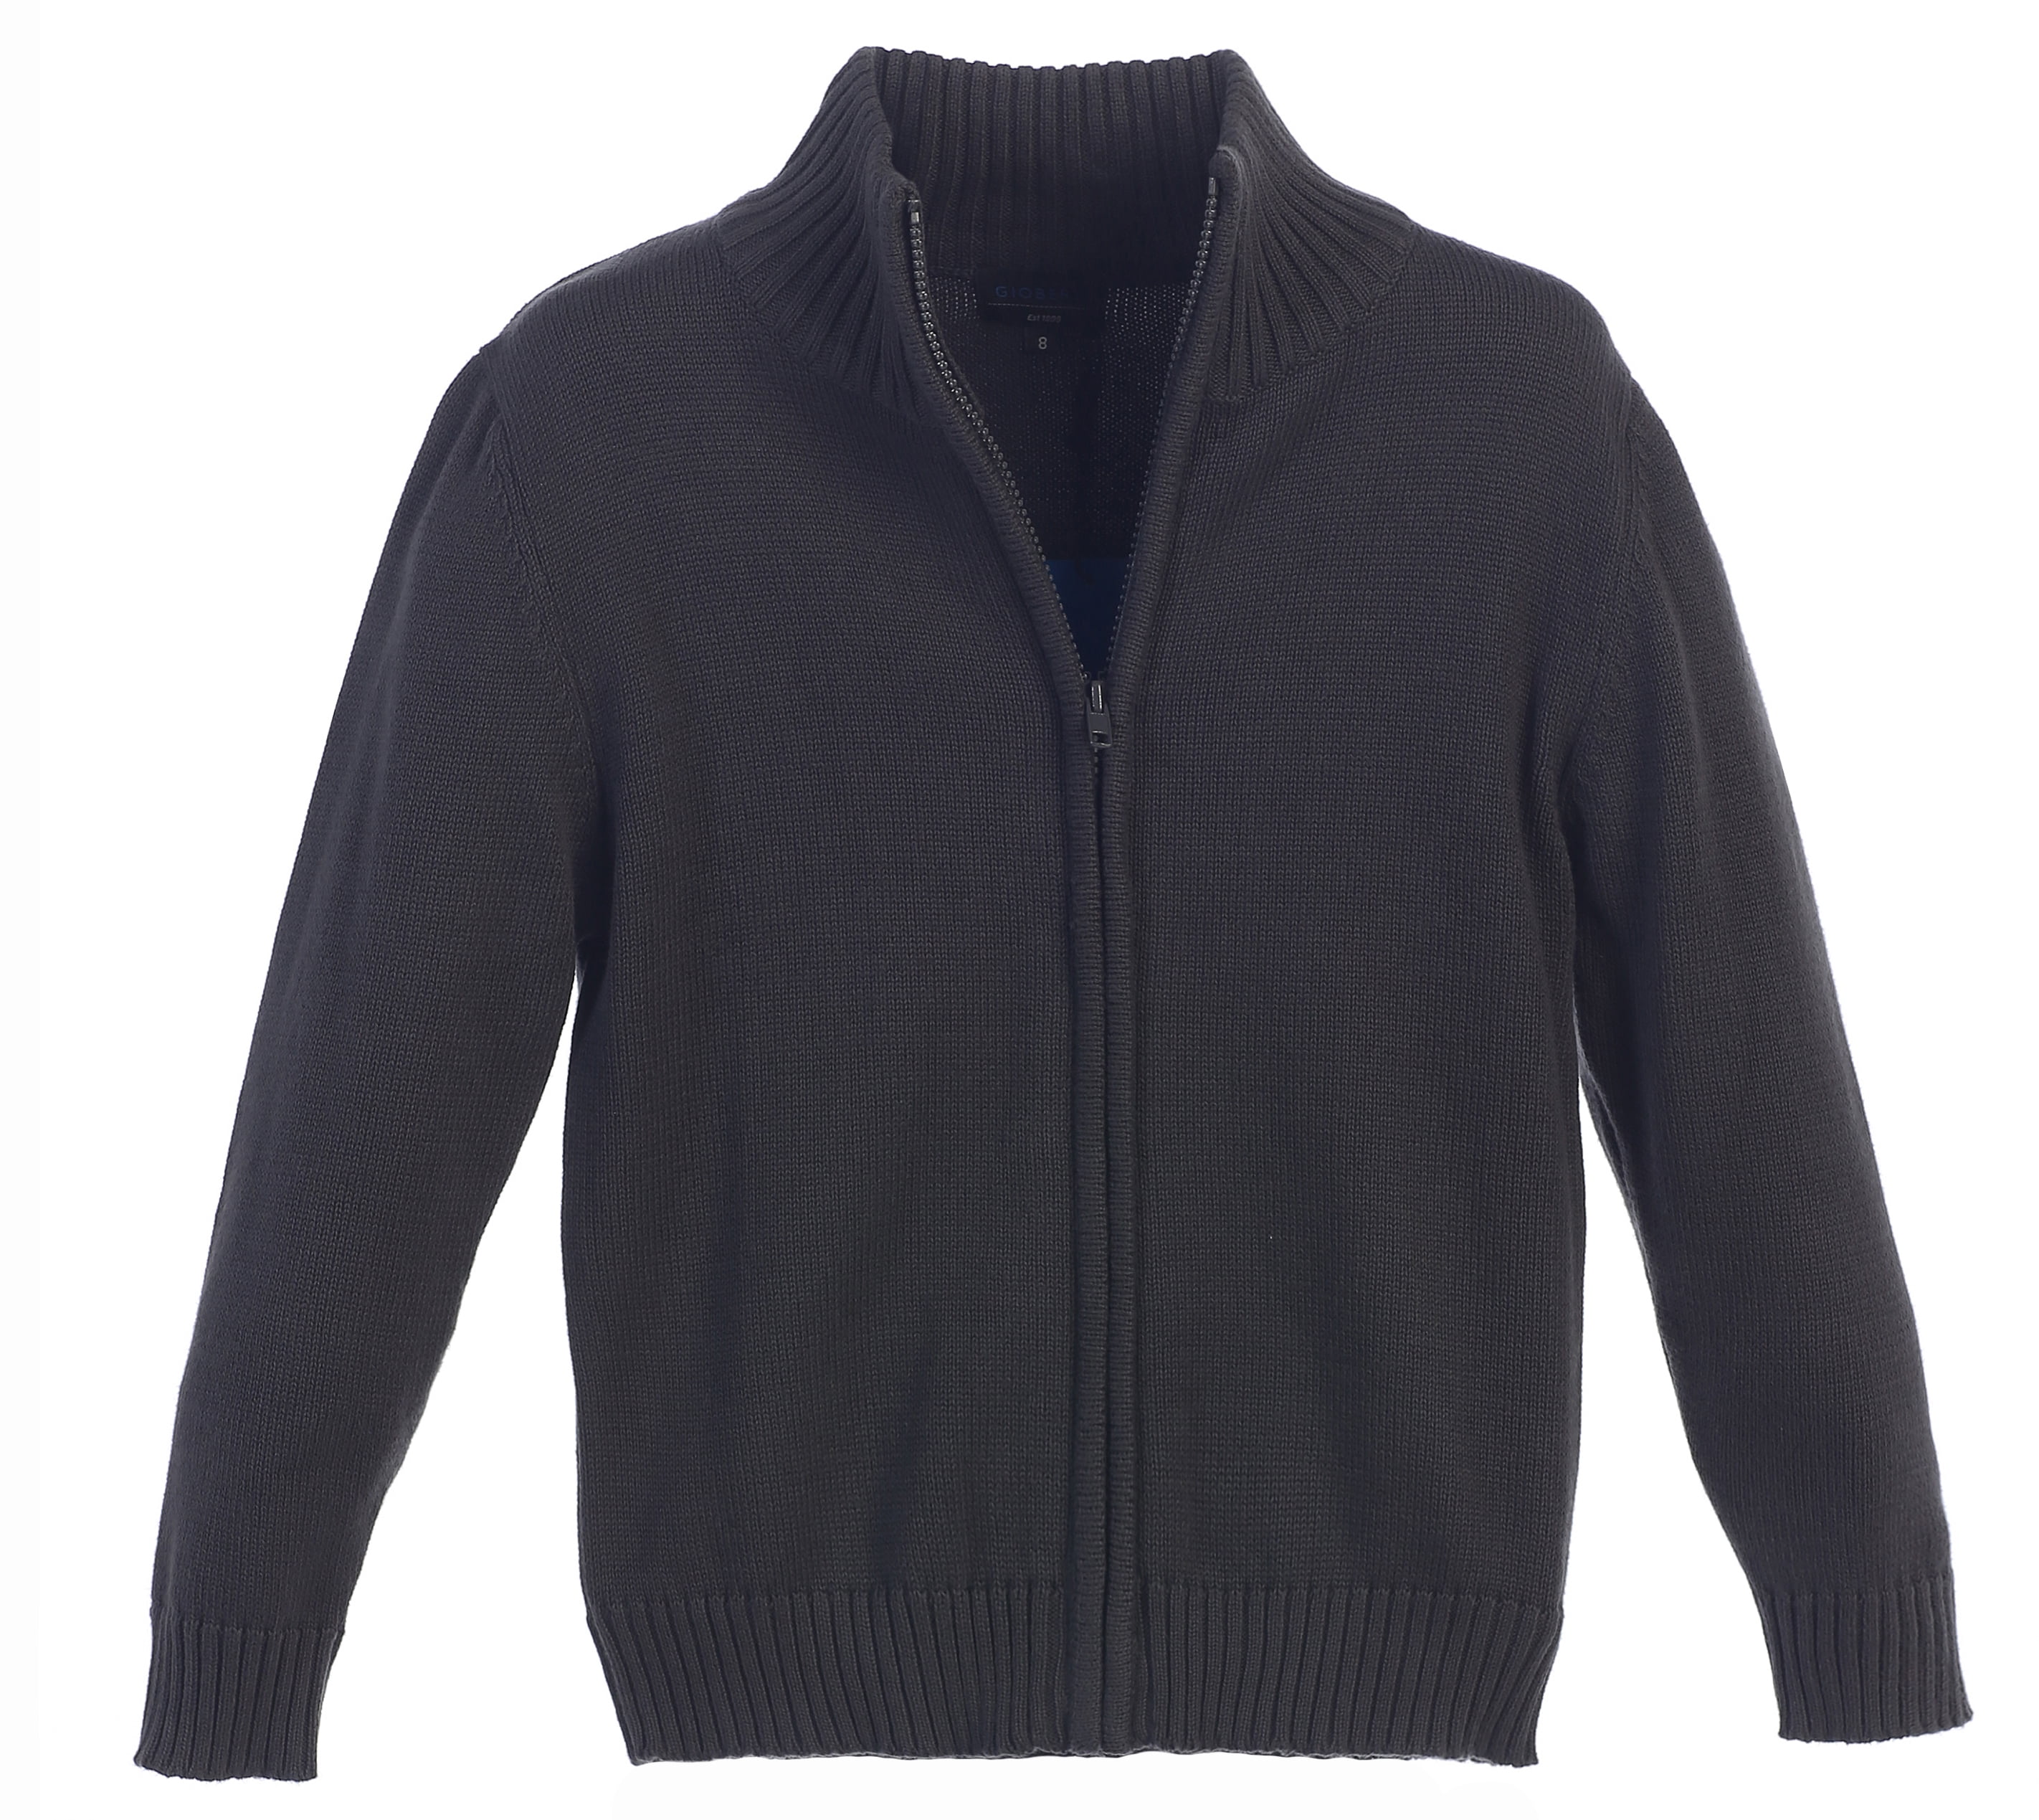 Gioberti Boys Knitted Full Zip 100% Cotton Cardigan Sweater 